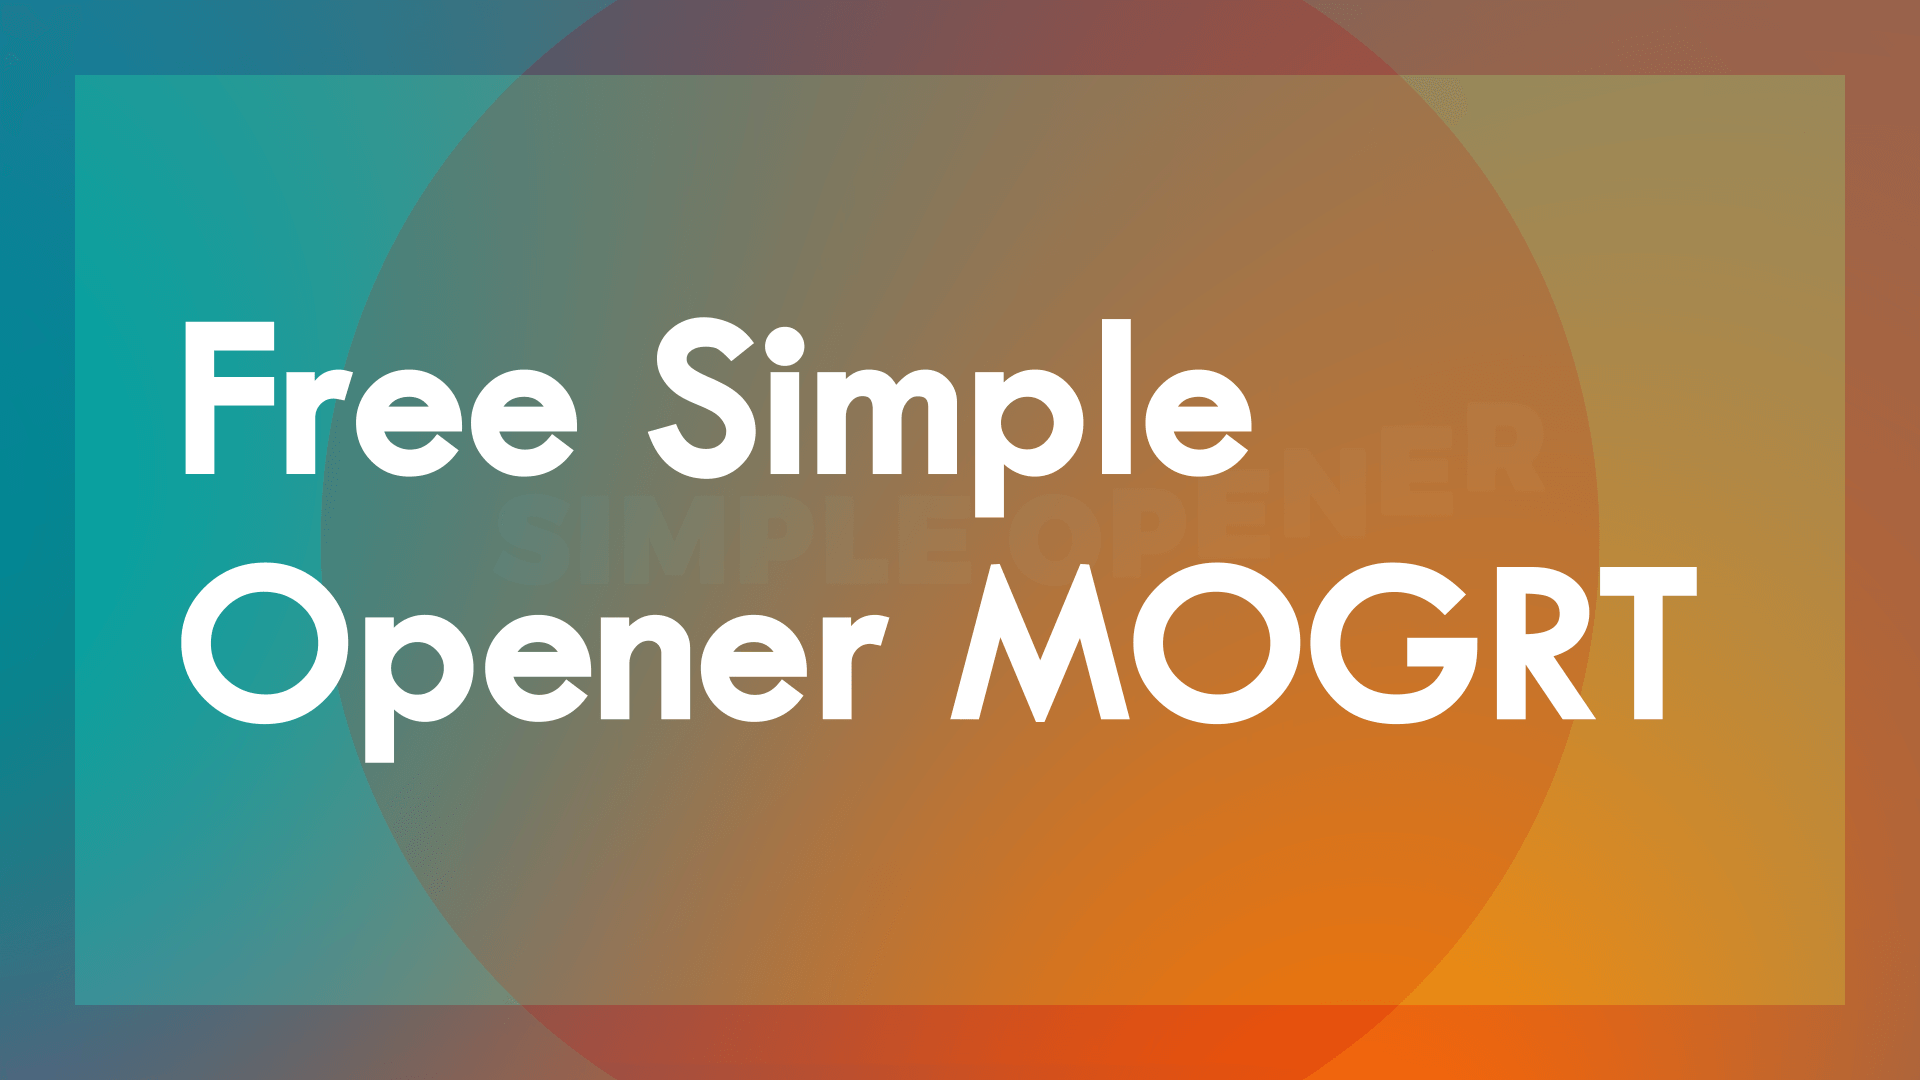 Free Simple Opener MOGRT